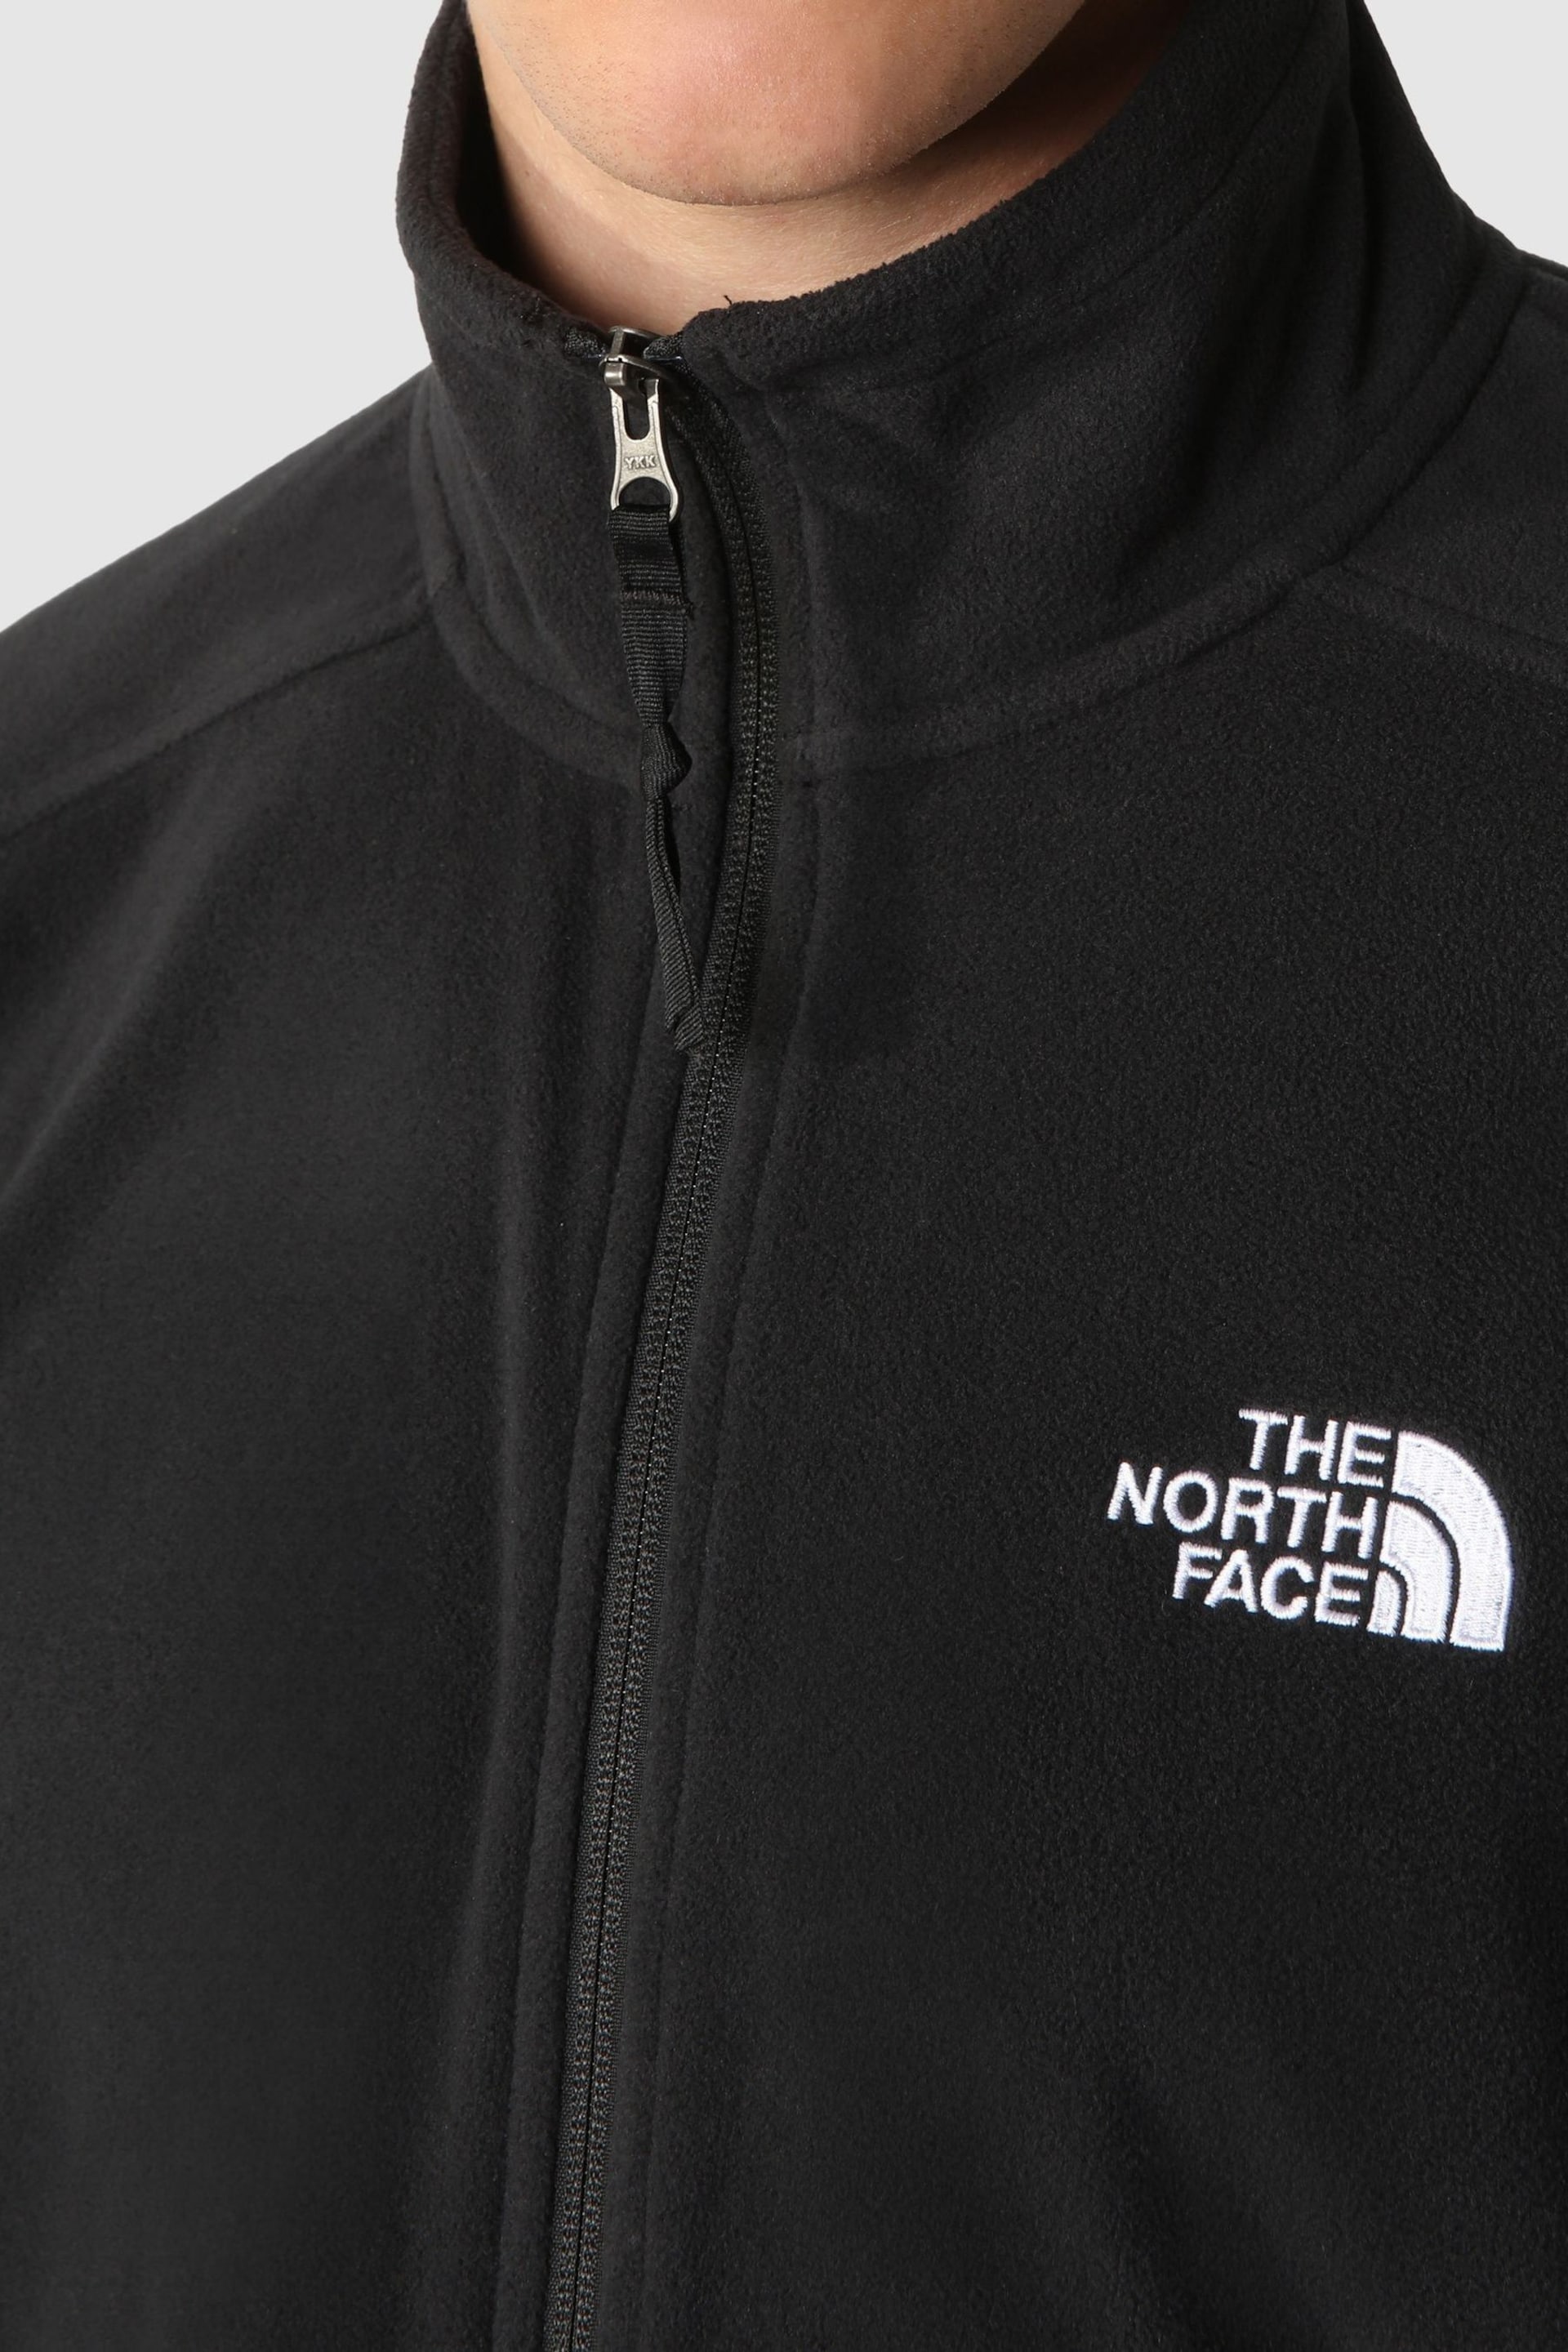 The North Face Mens Elements Polartec® 100 1/4 Zip Fleece - Image 4 of 6